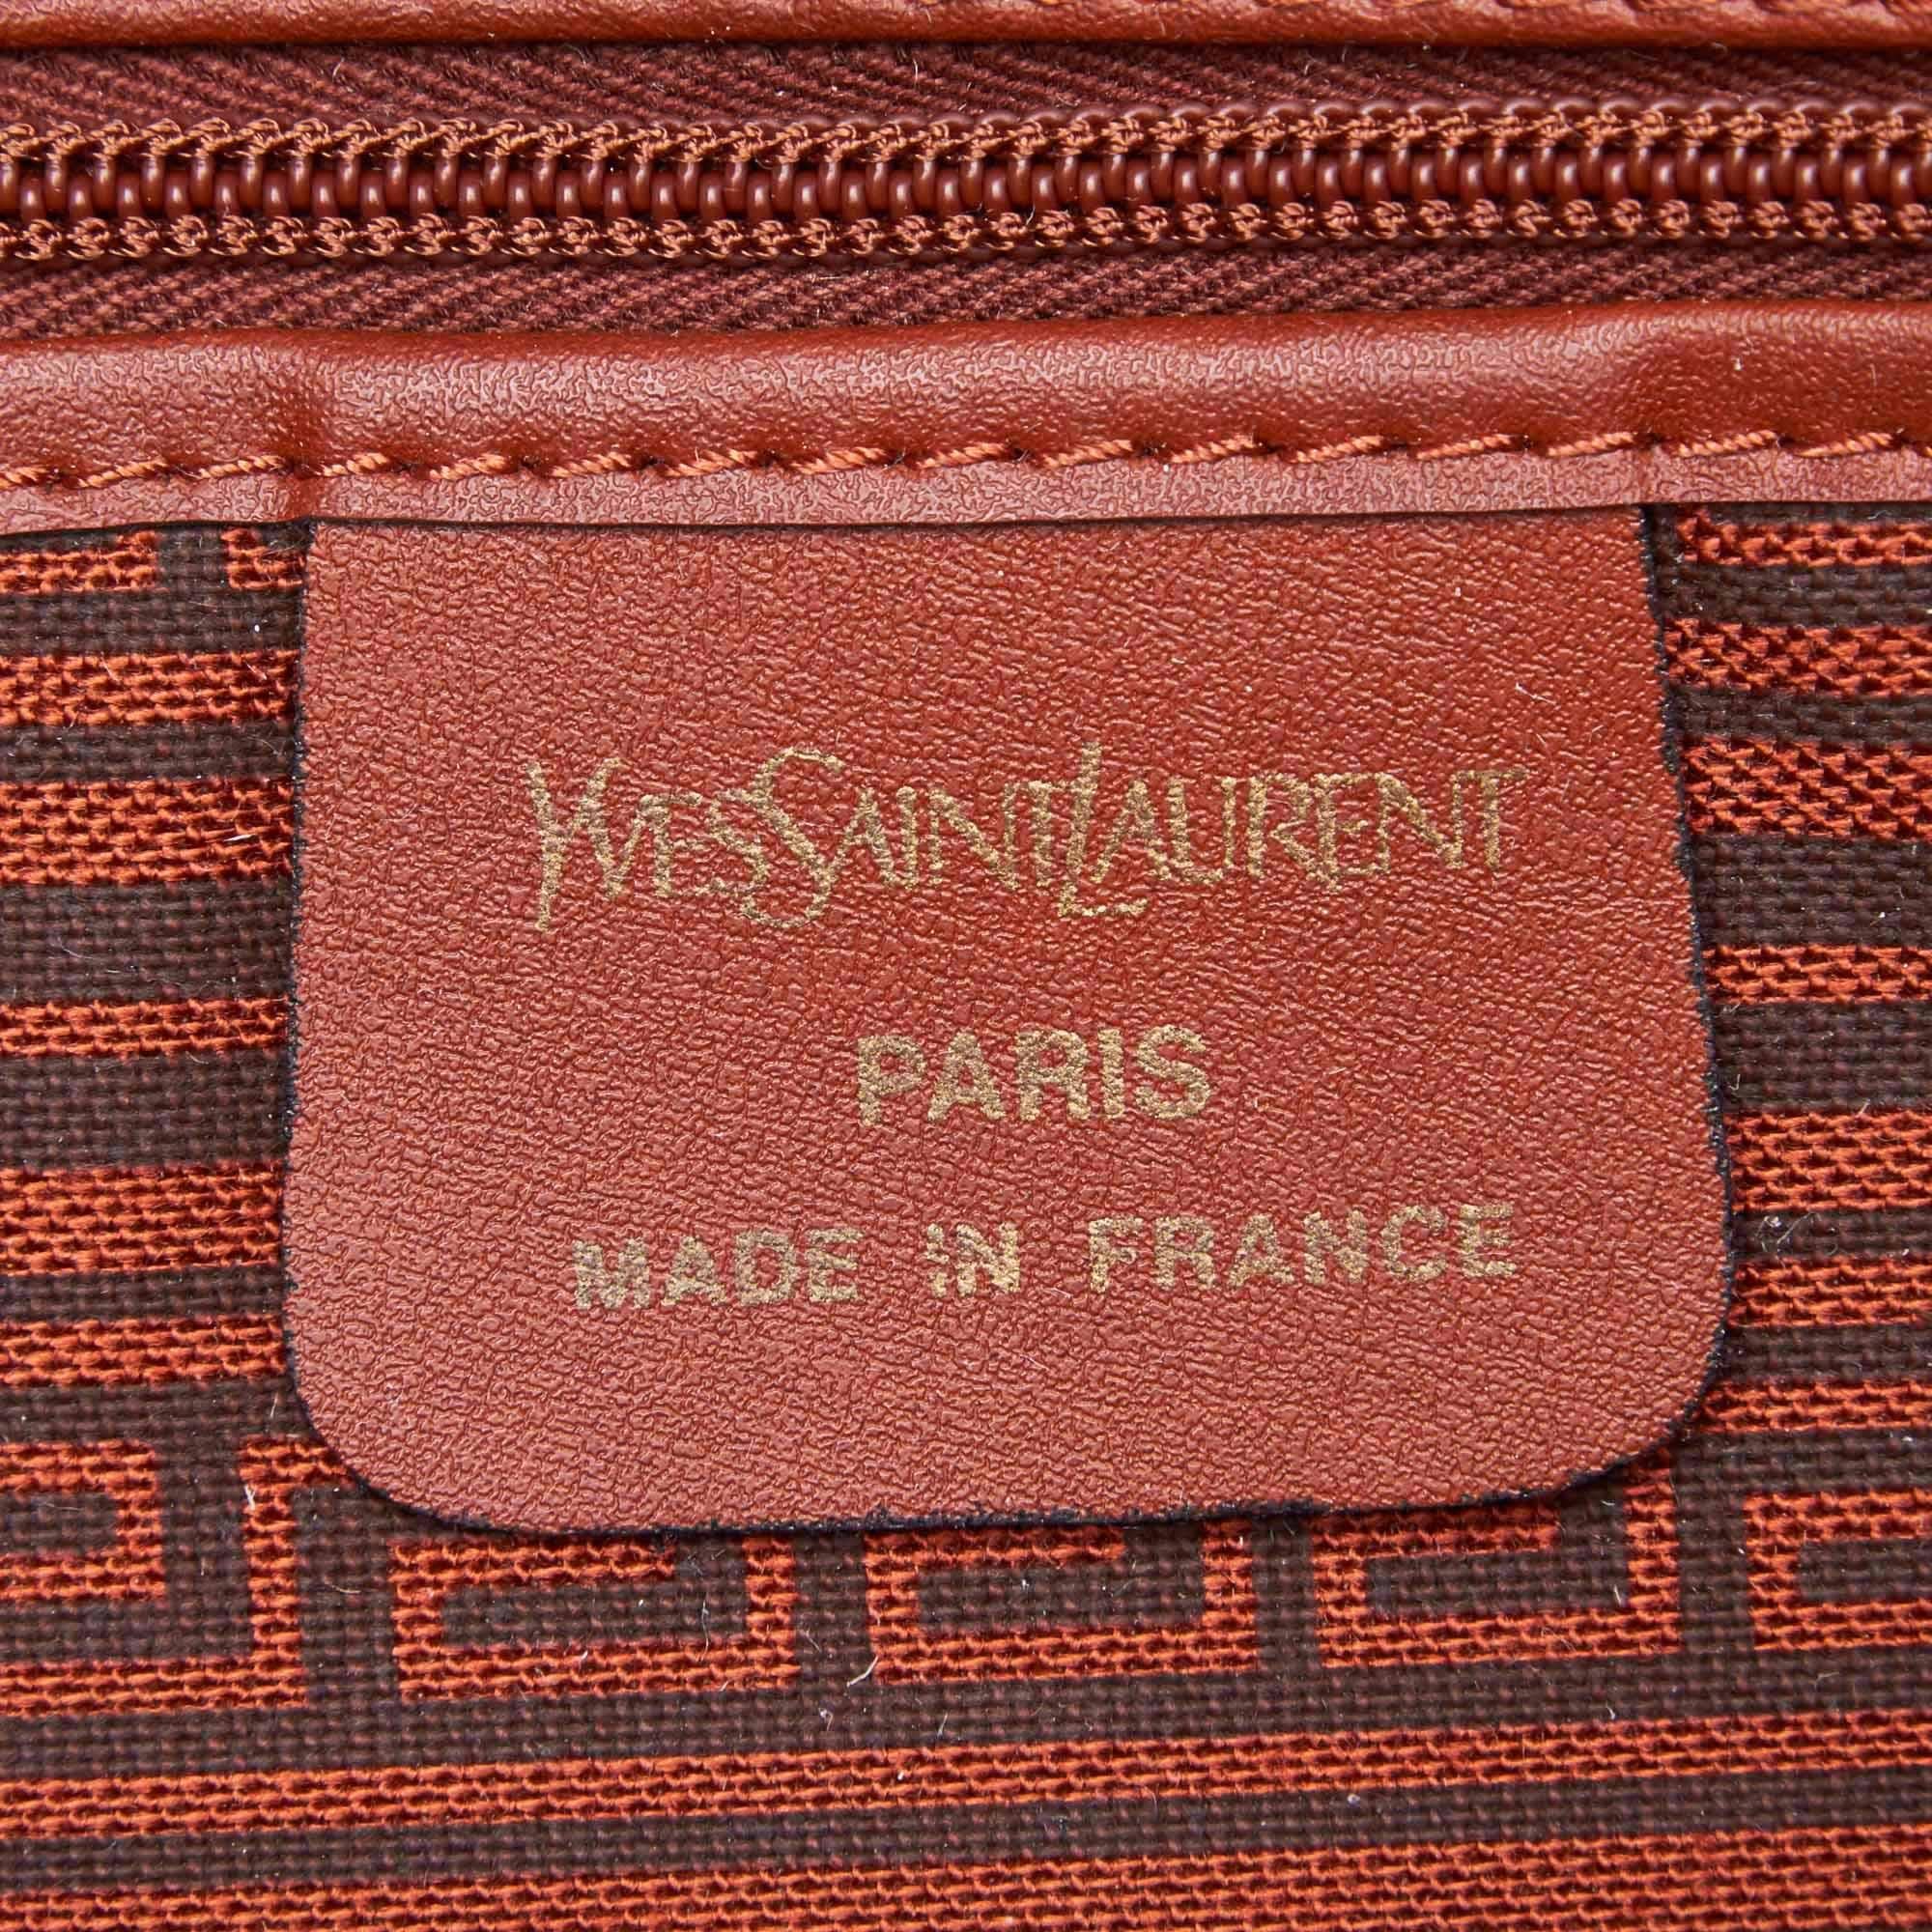 Vintage Authentic YSL Black Canvas Fabric Crossbody Bag France MEDIUM  For Sale 2